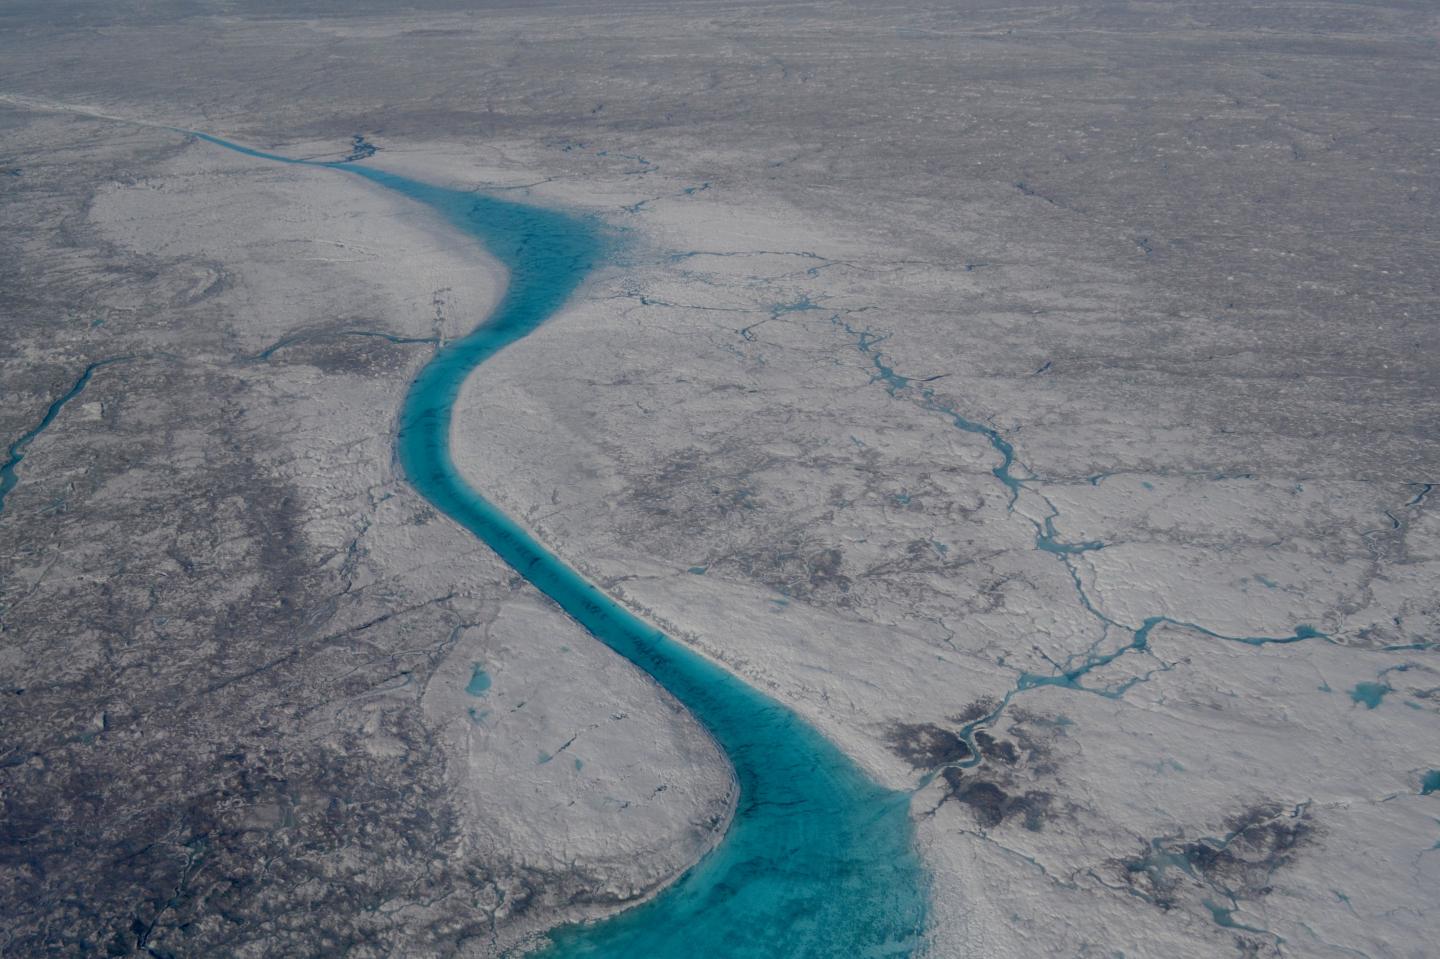 Supraglacial Stream on the Greenland Ice Sheet